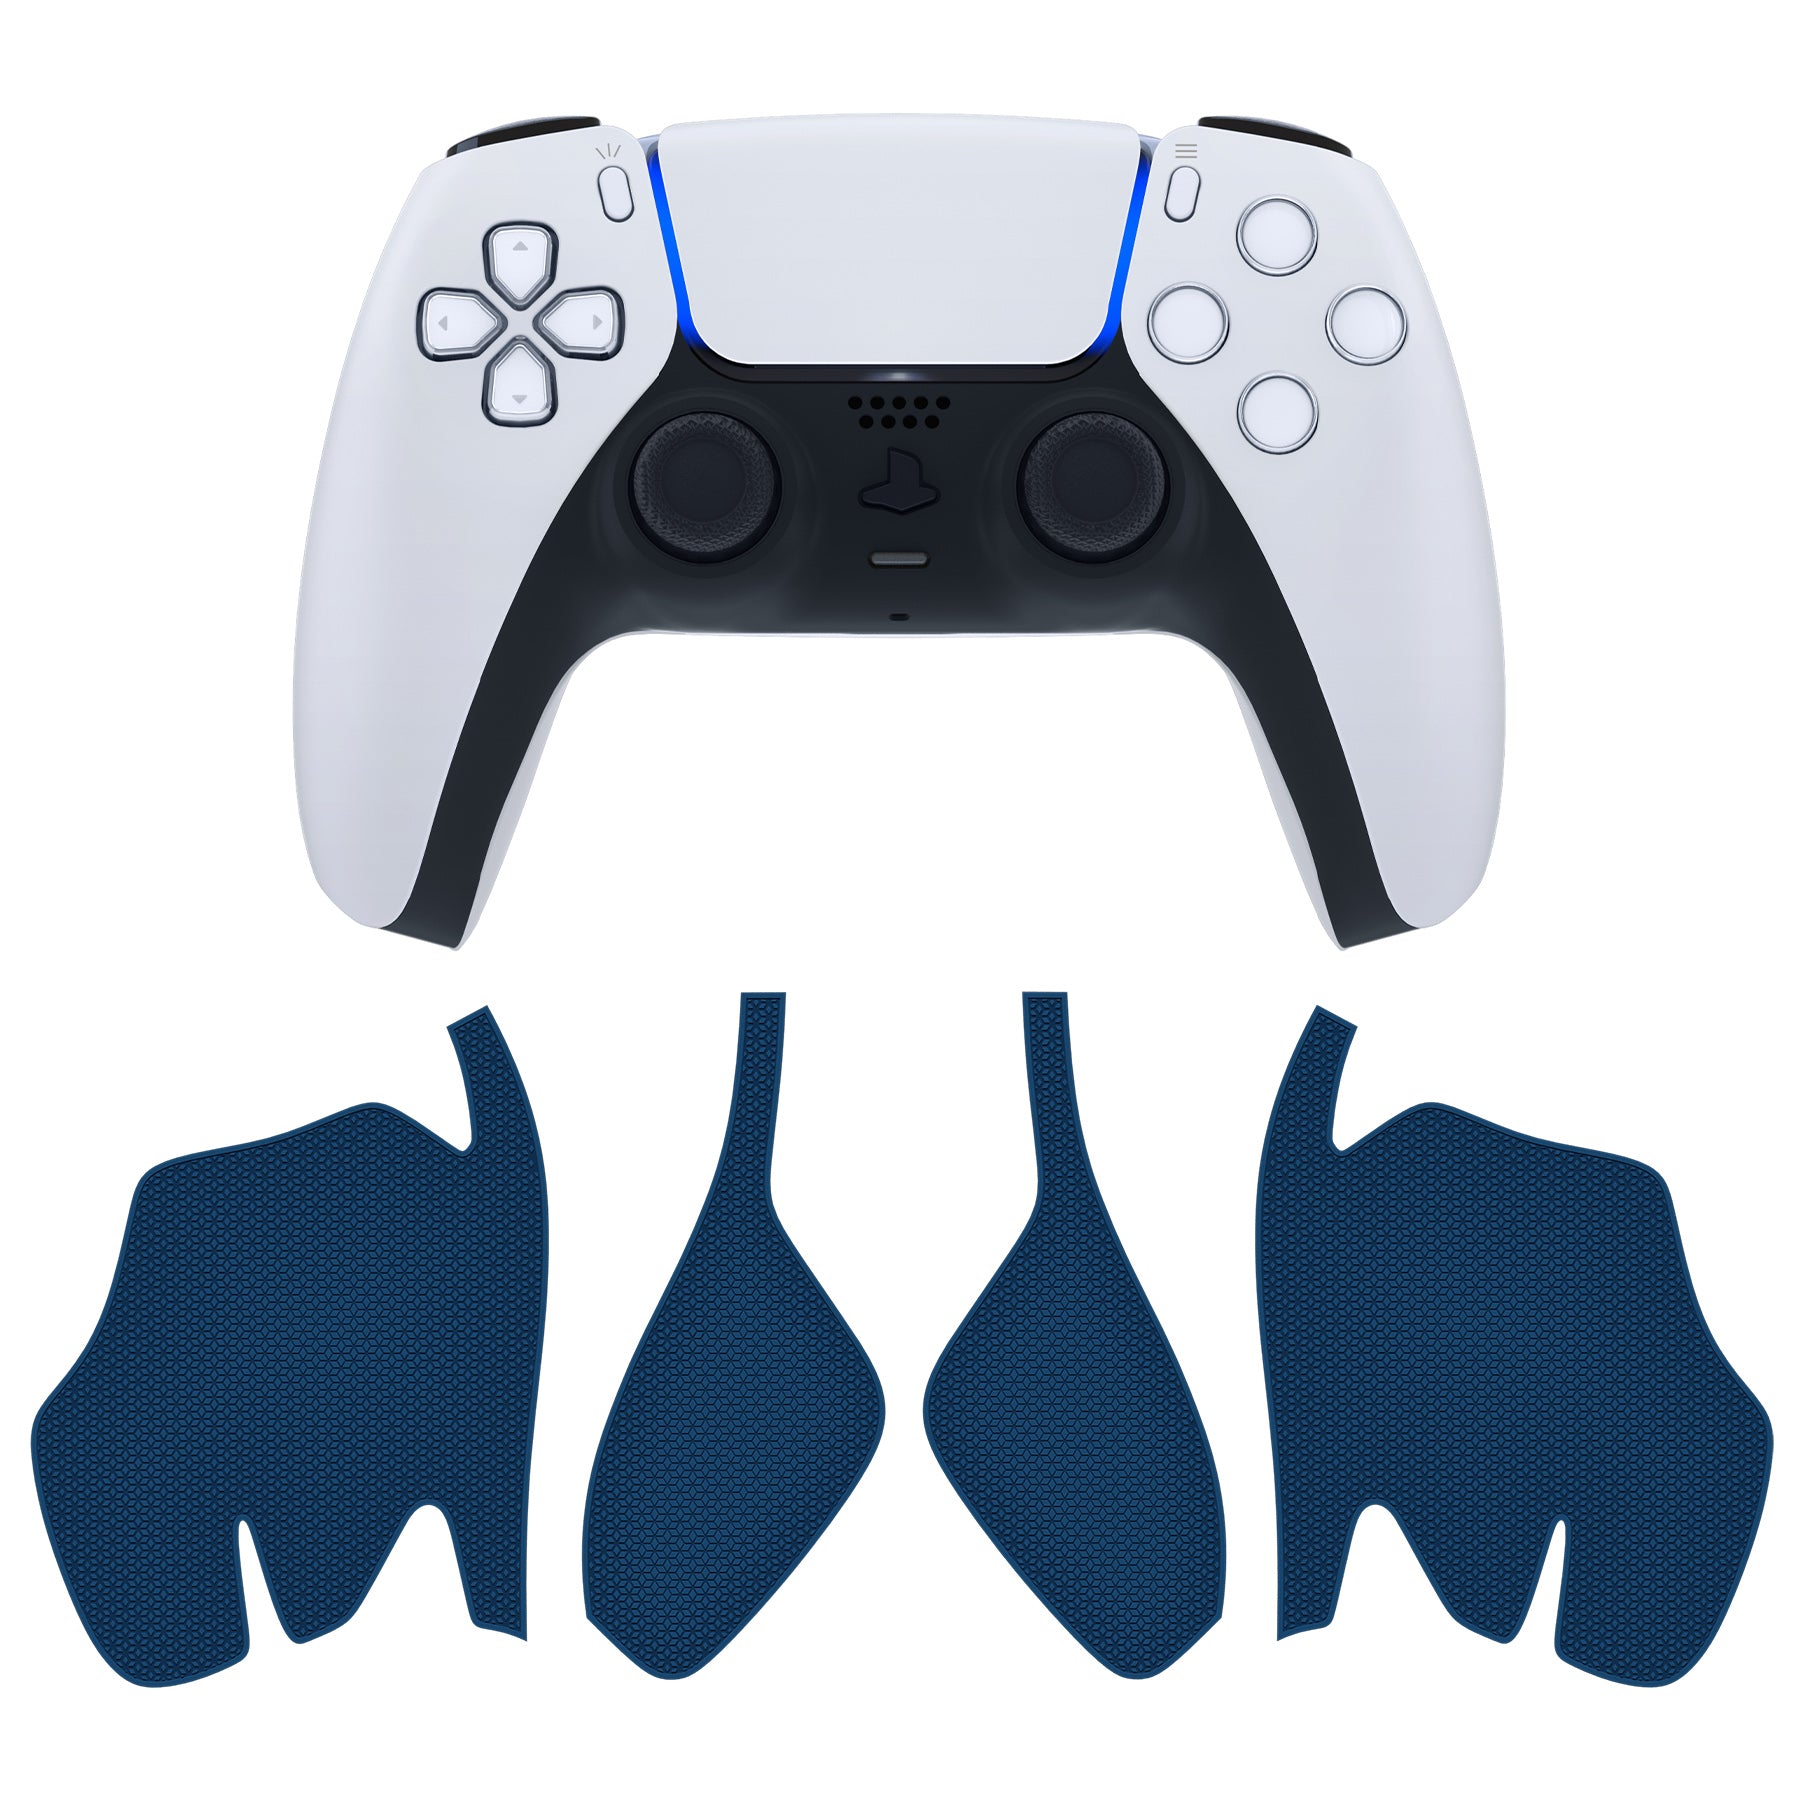 PlayVital Split Design Anti-Skid Sweat-Absorbent Premium Grip for PS5 Controller – Klein Blue - FHPFM003 PlayVital